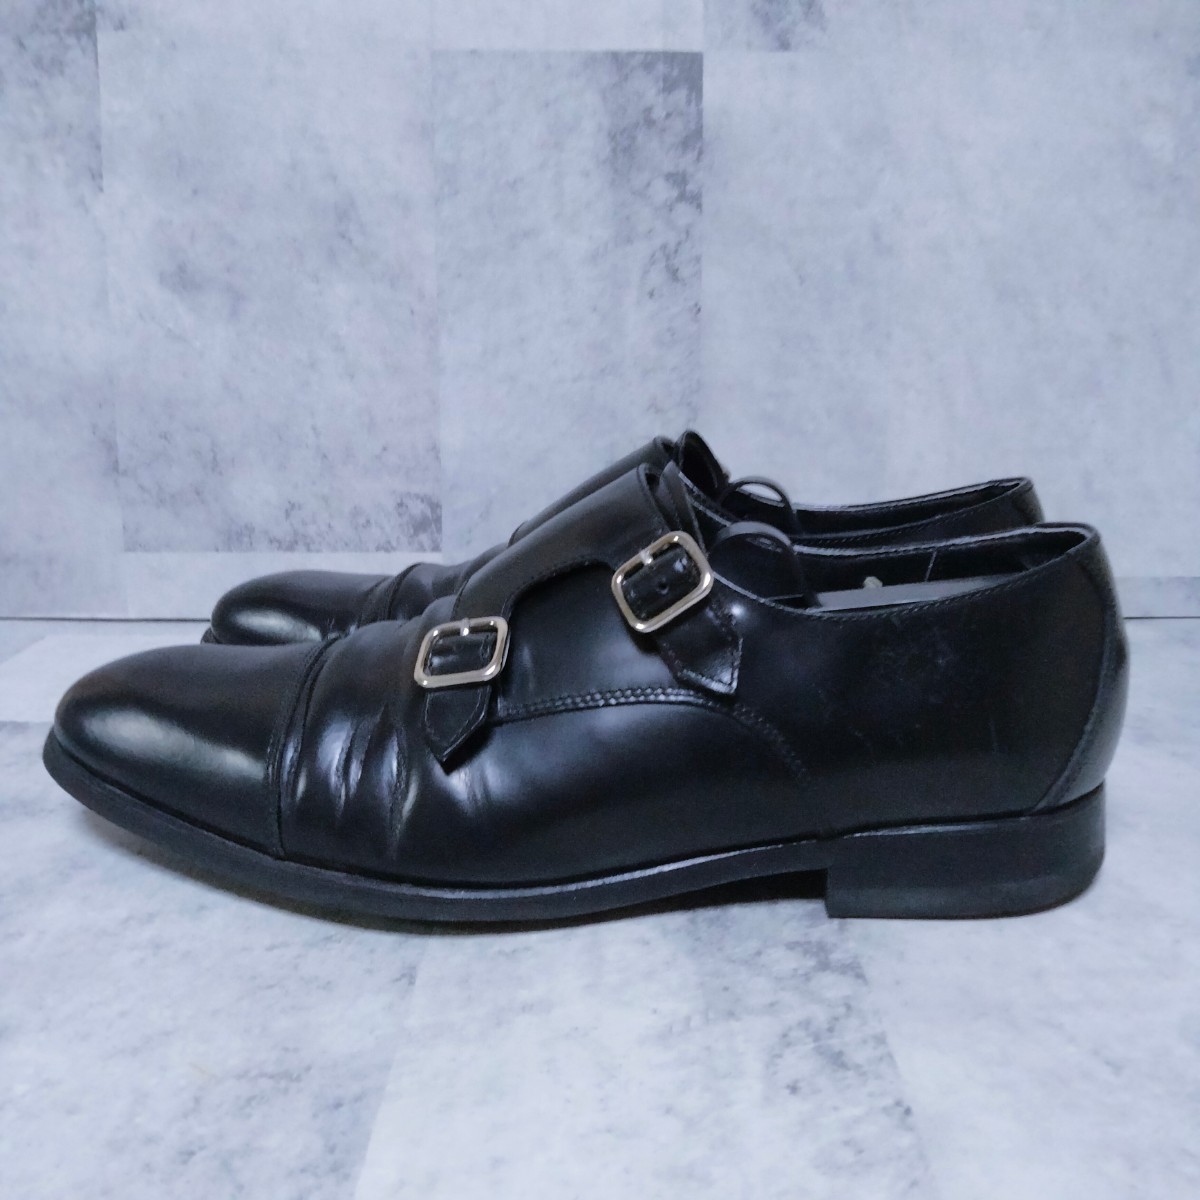 REGAL リーガル V196 ■ モンクストラップ ビジネスシューズ 25.0cm ■ ブラック 黒 メンズ 革靴 レザー 本革 _画像6